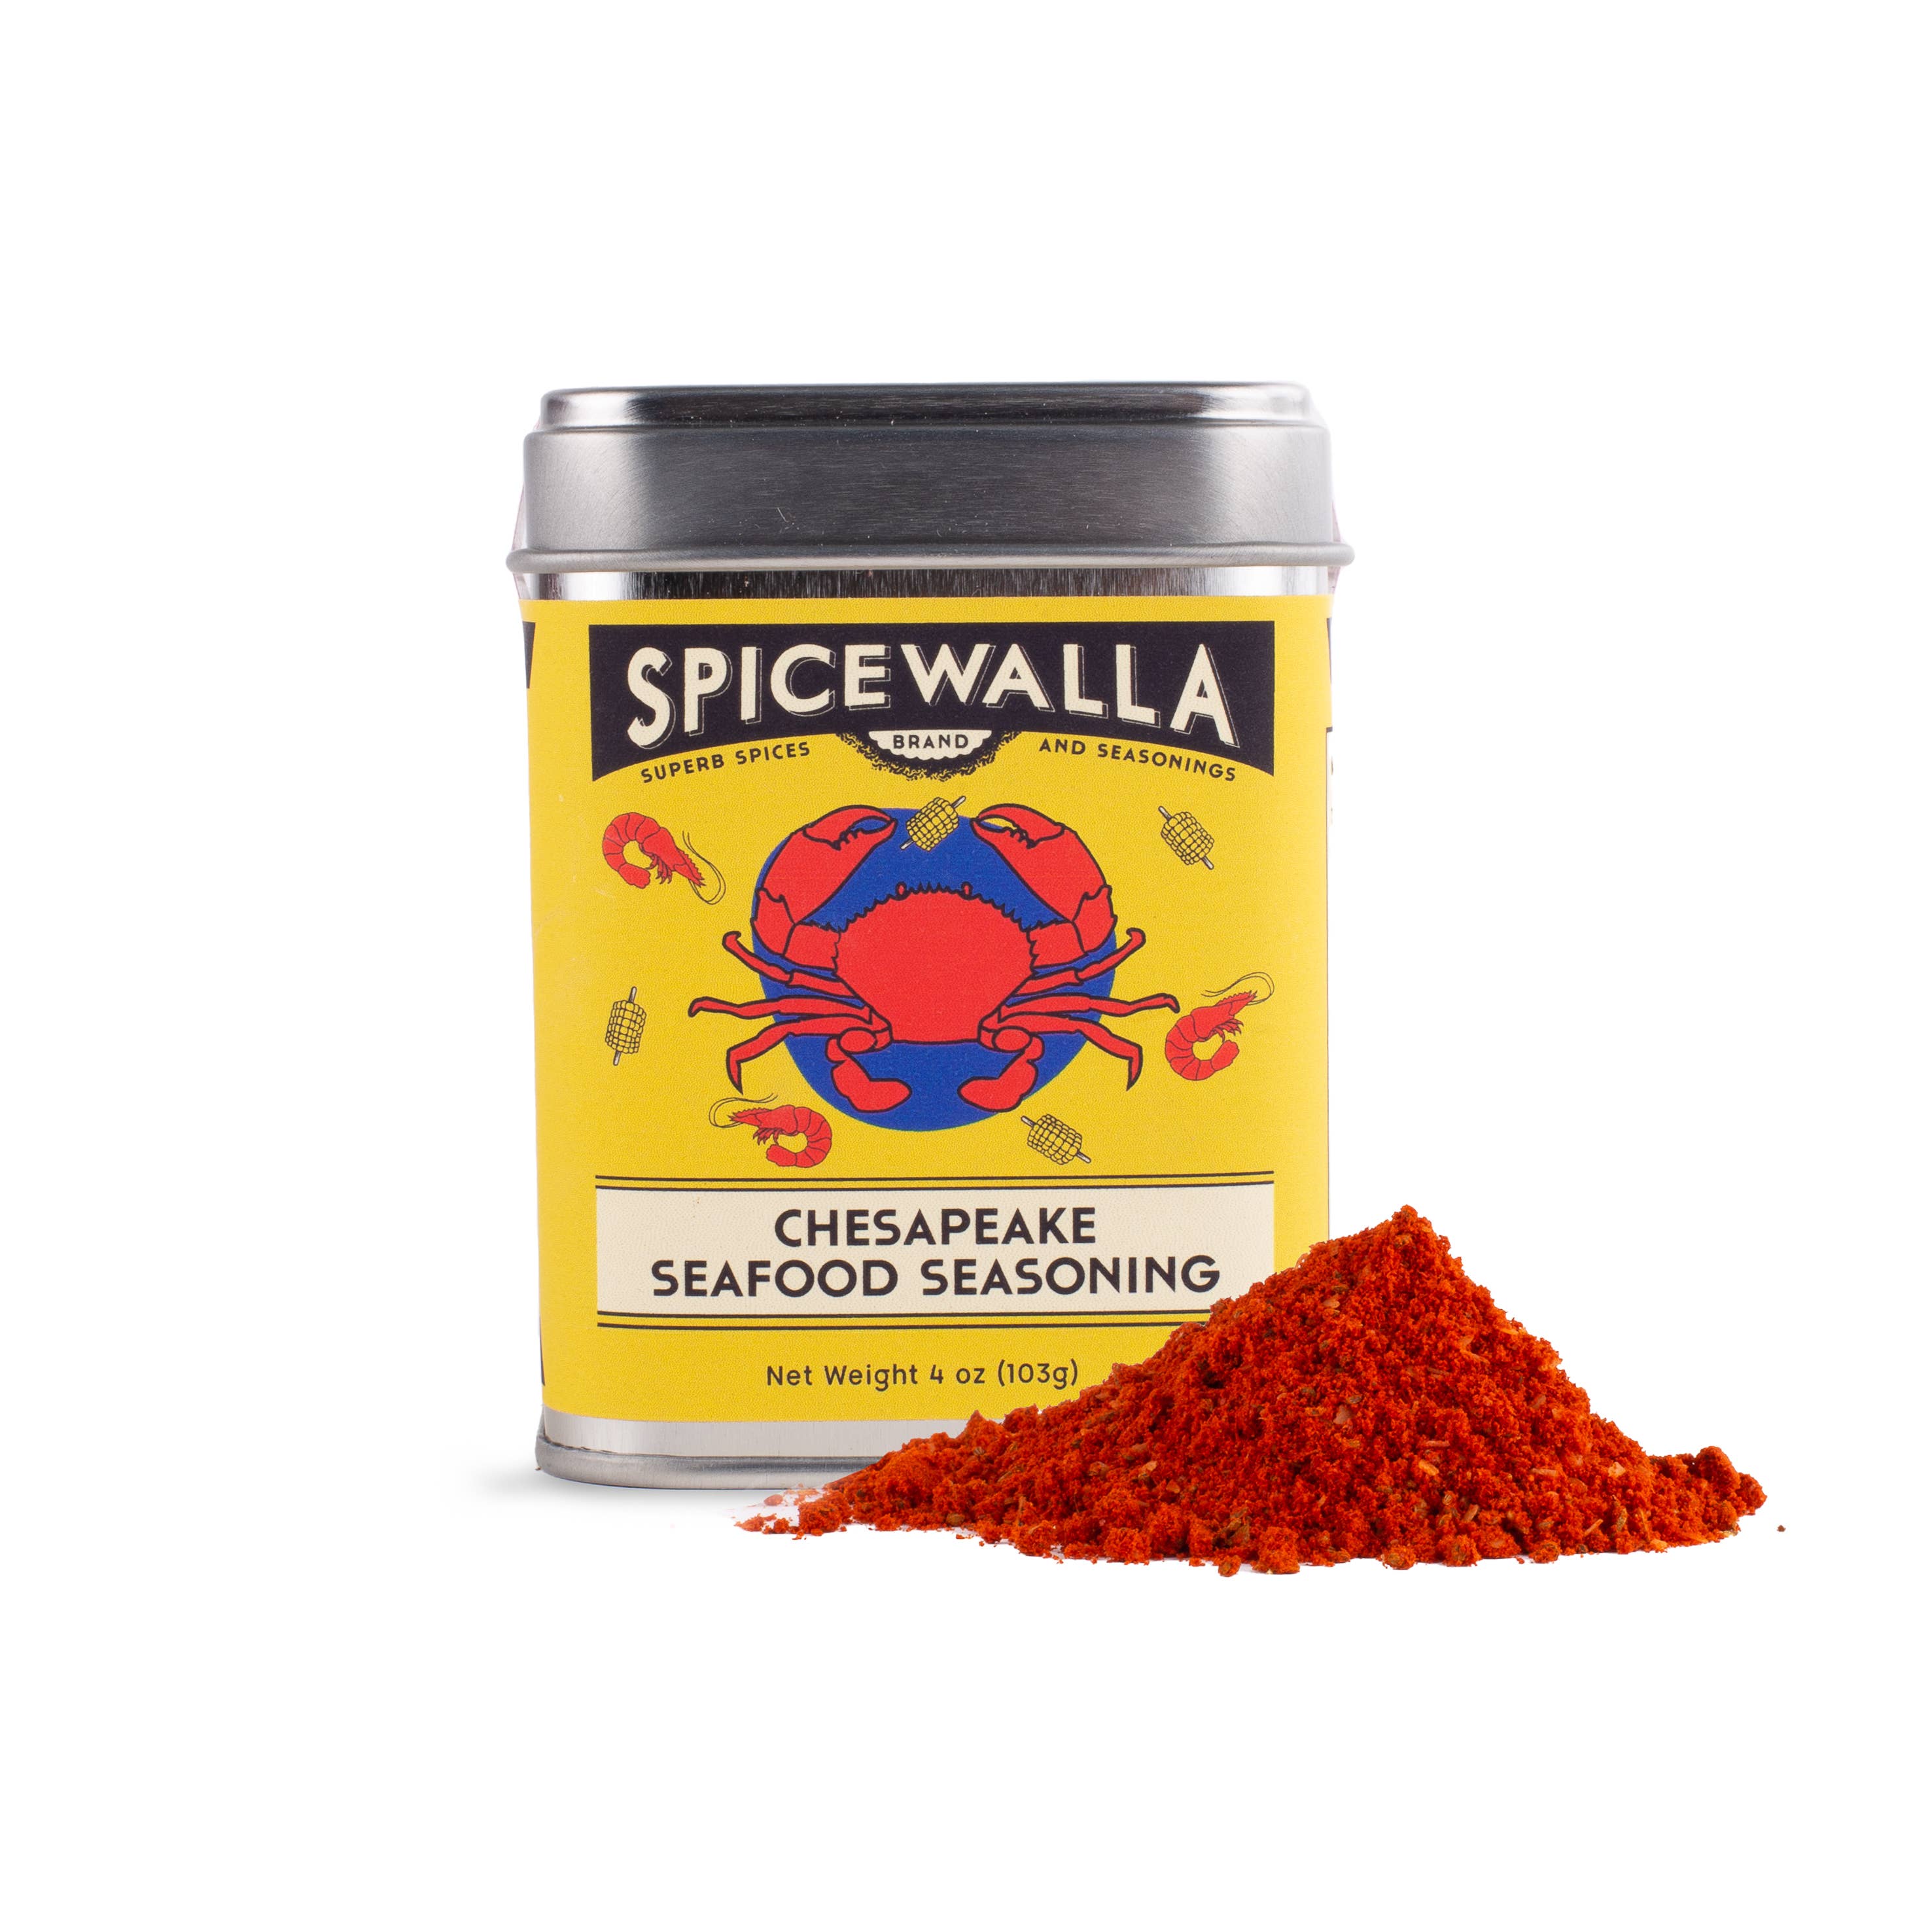 Spicewalla - Chesapeake Seafood Seasoning